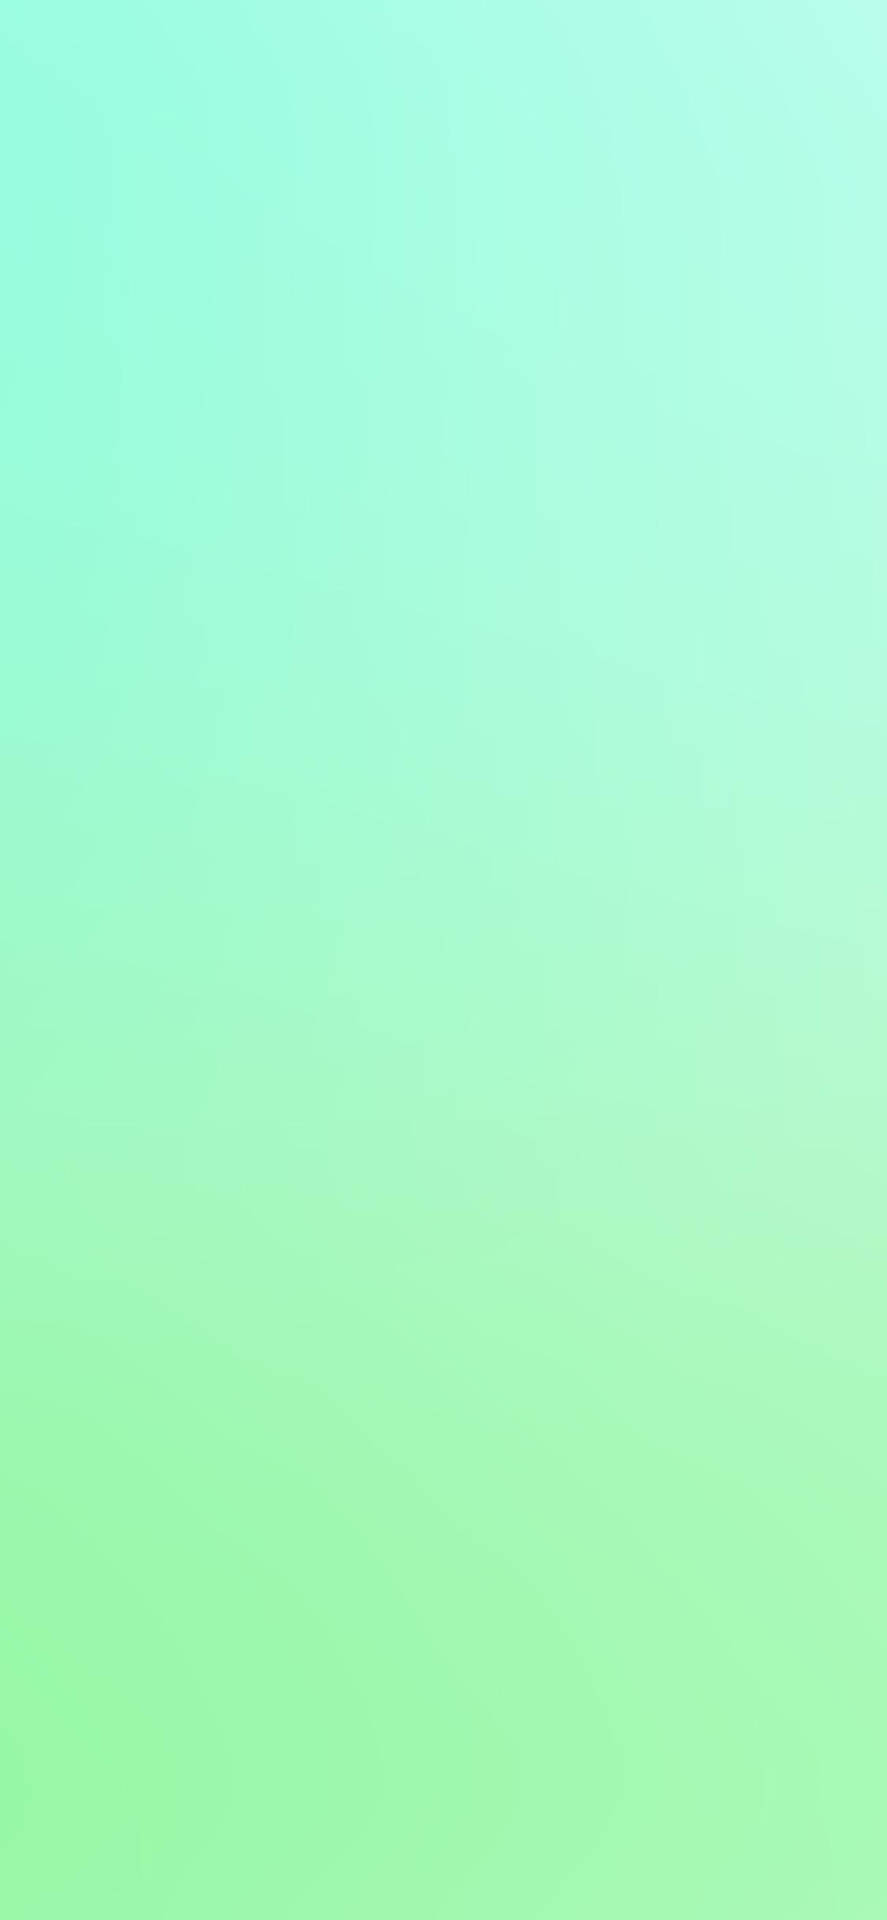 Gradient Mint Green Iphone Wallpaper